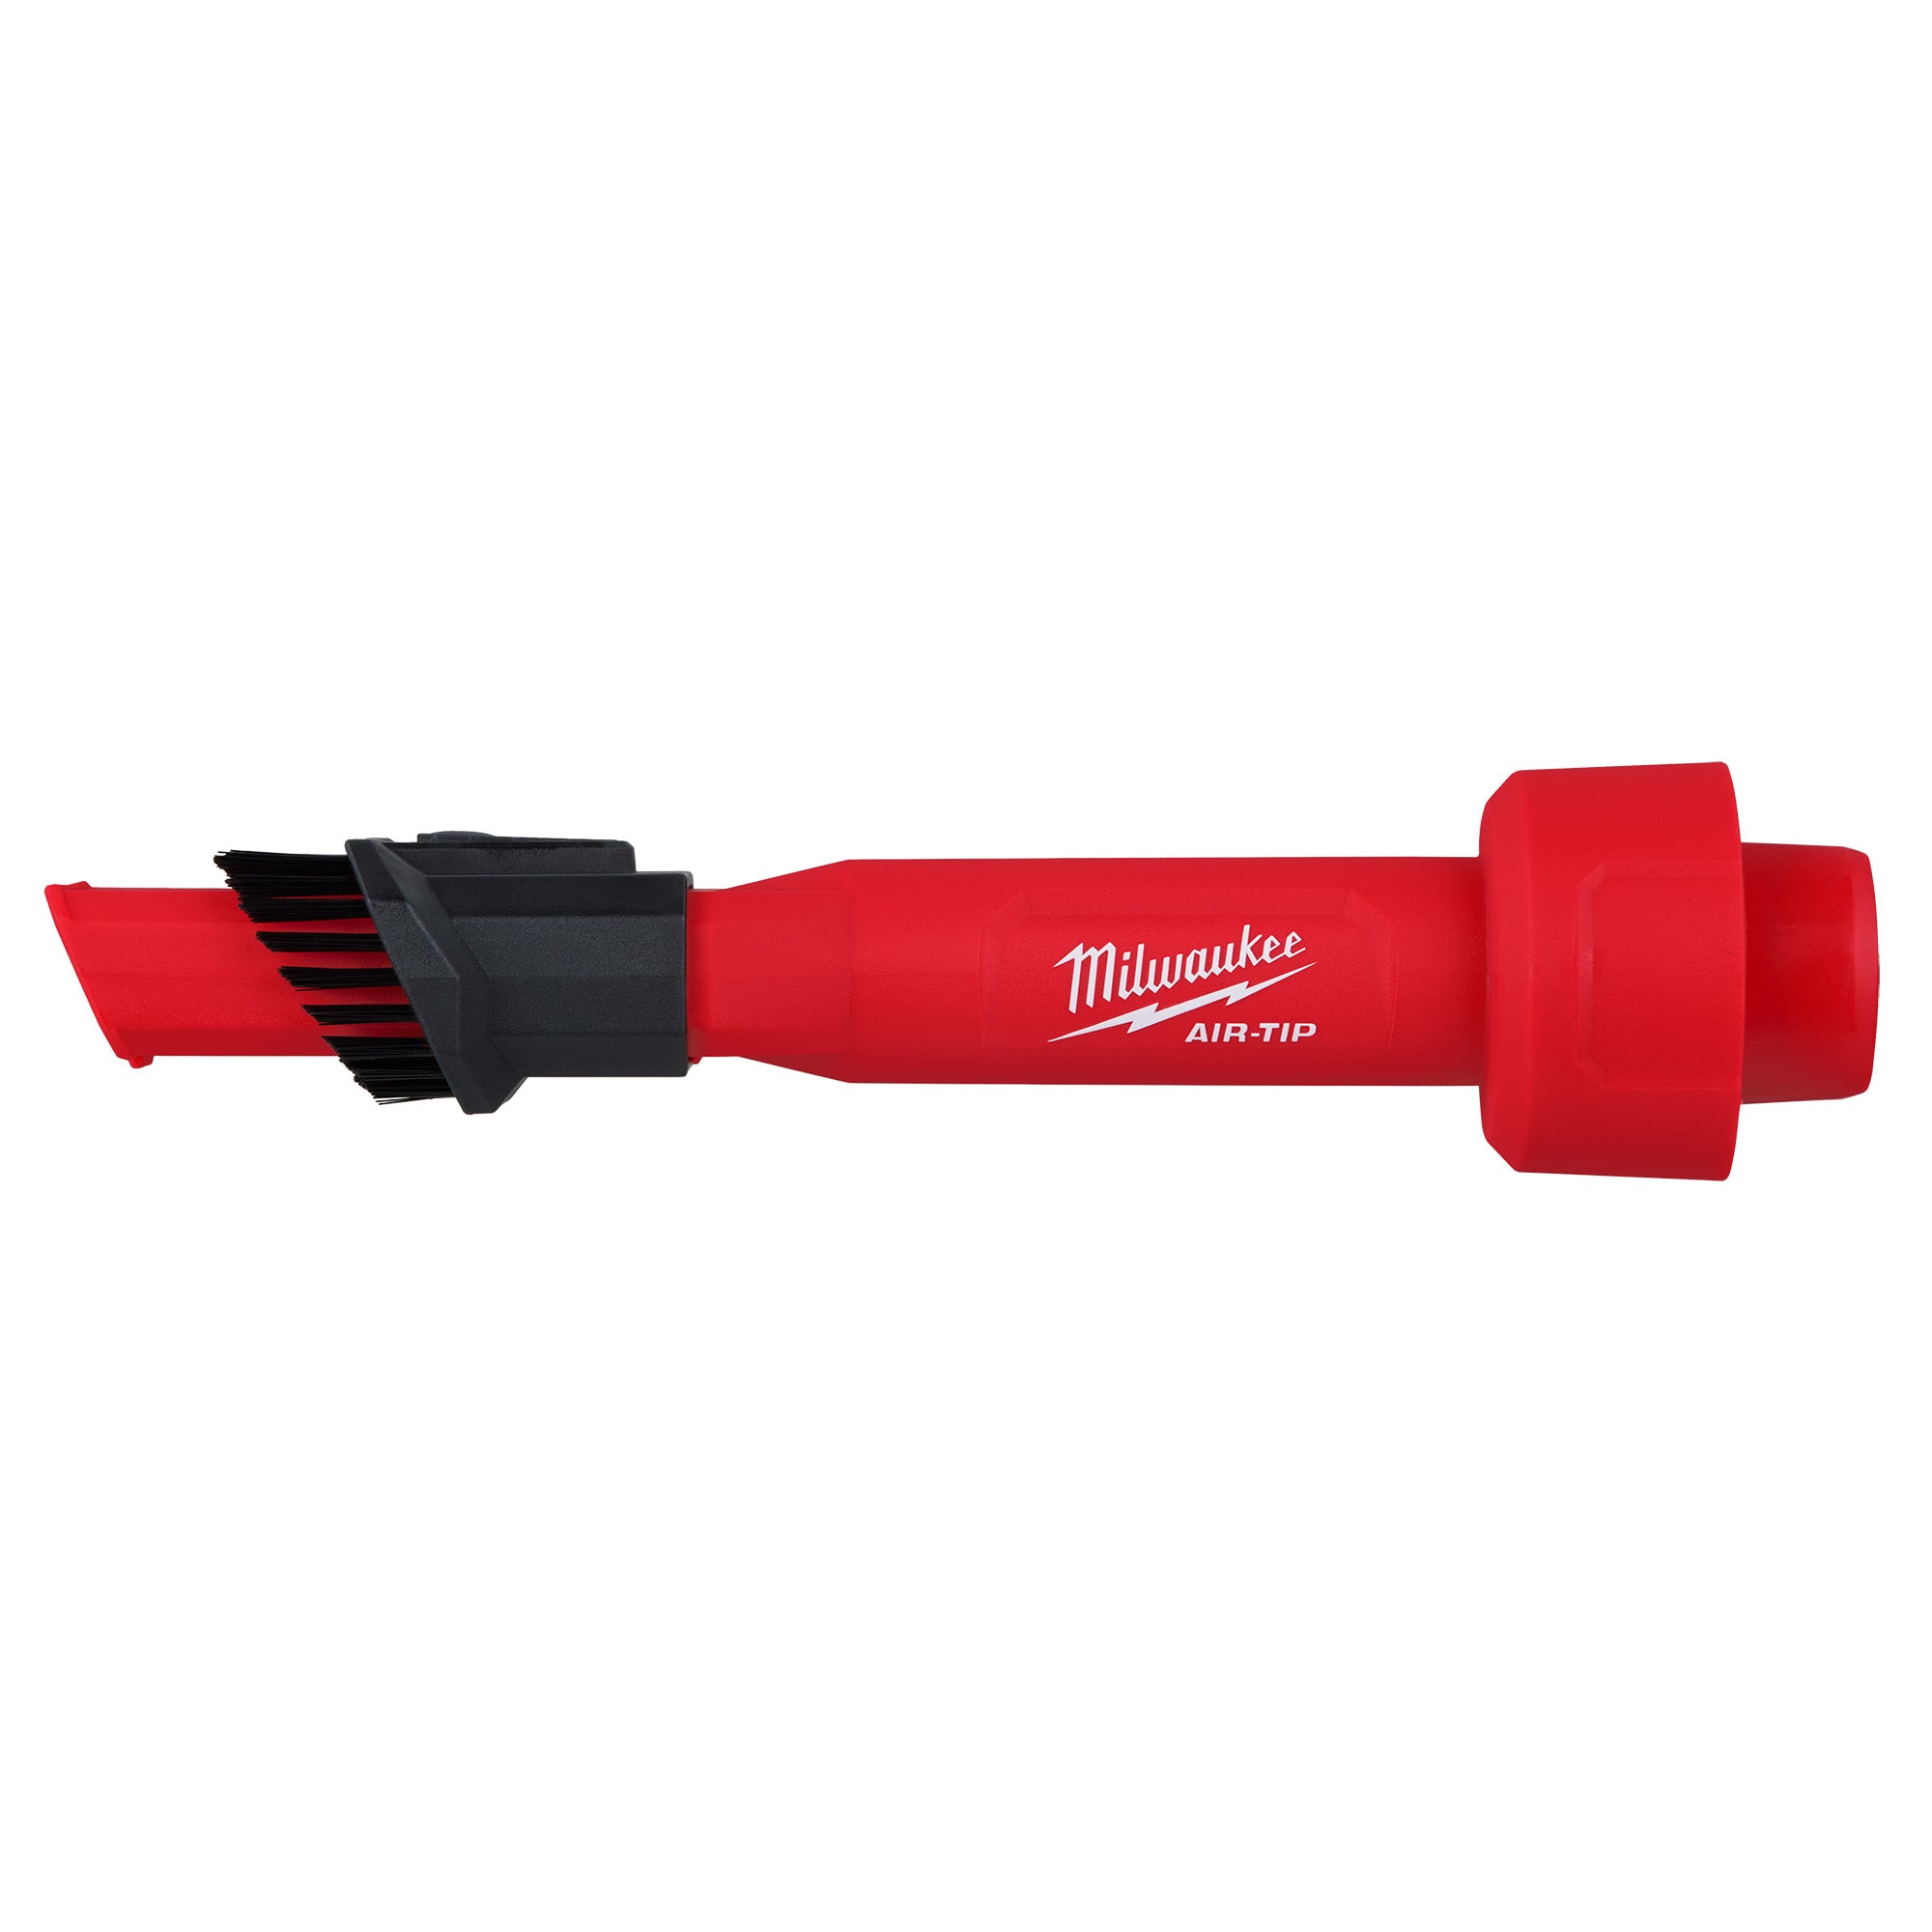 AIR-TIP 2-in-1 Utility Brush Tool